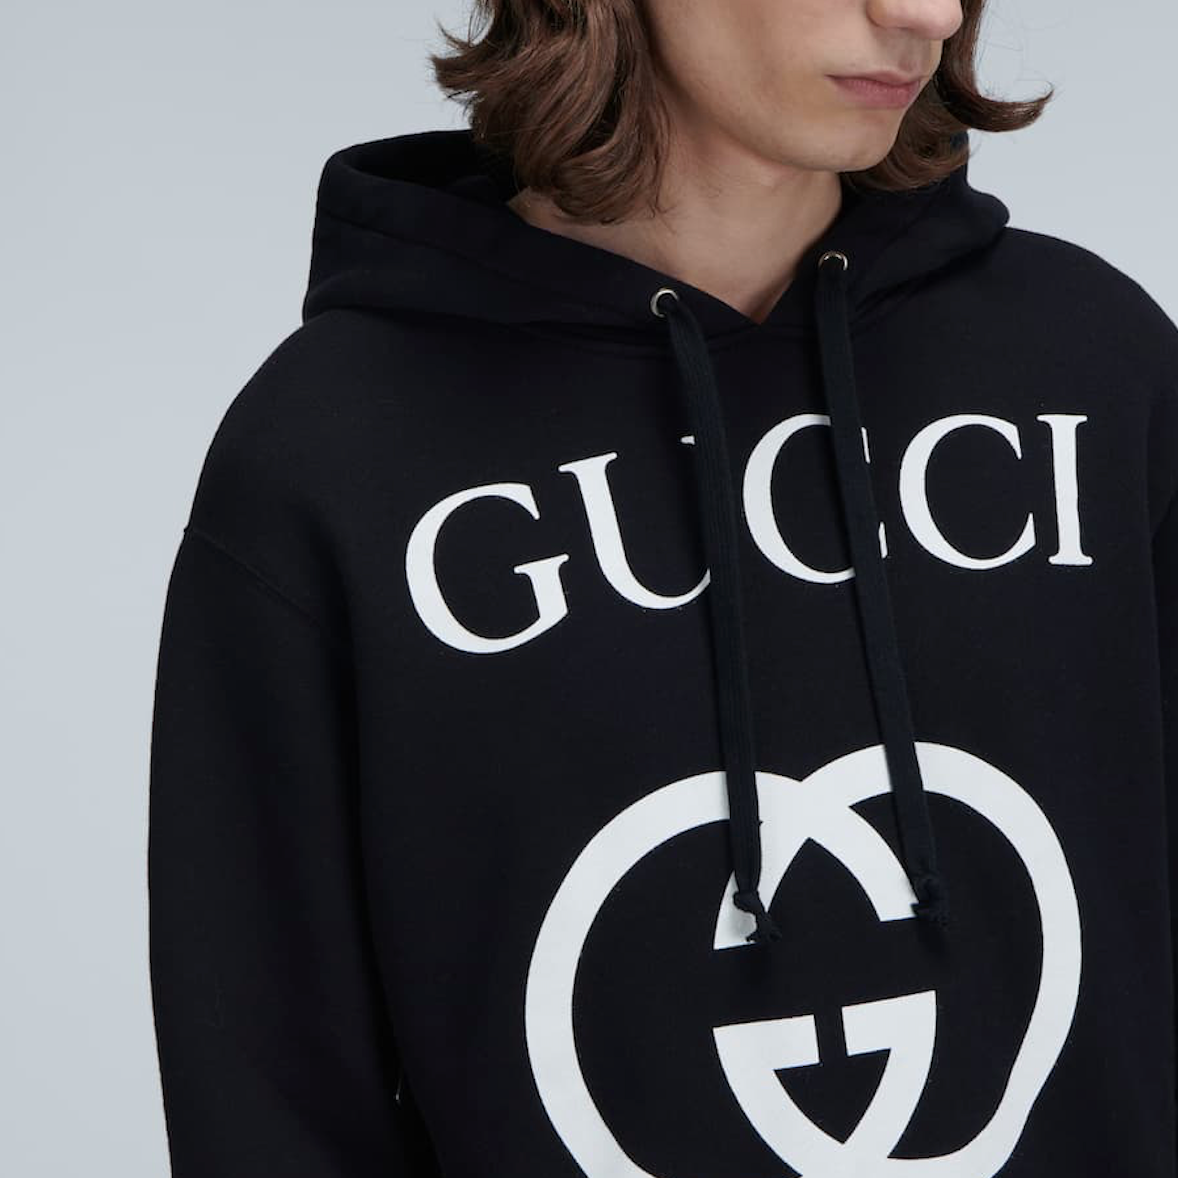 Brun Banke skadedyr How To Spot Real Vs Fake Gucci Interlocking G Hoodie – LegitGrails